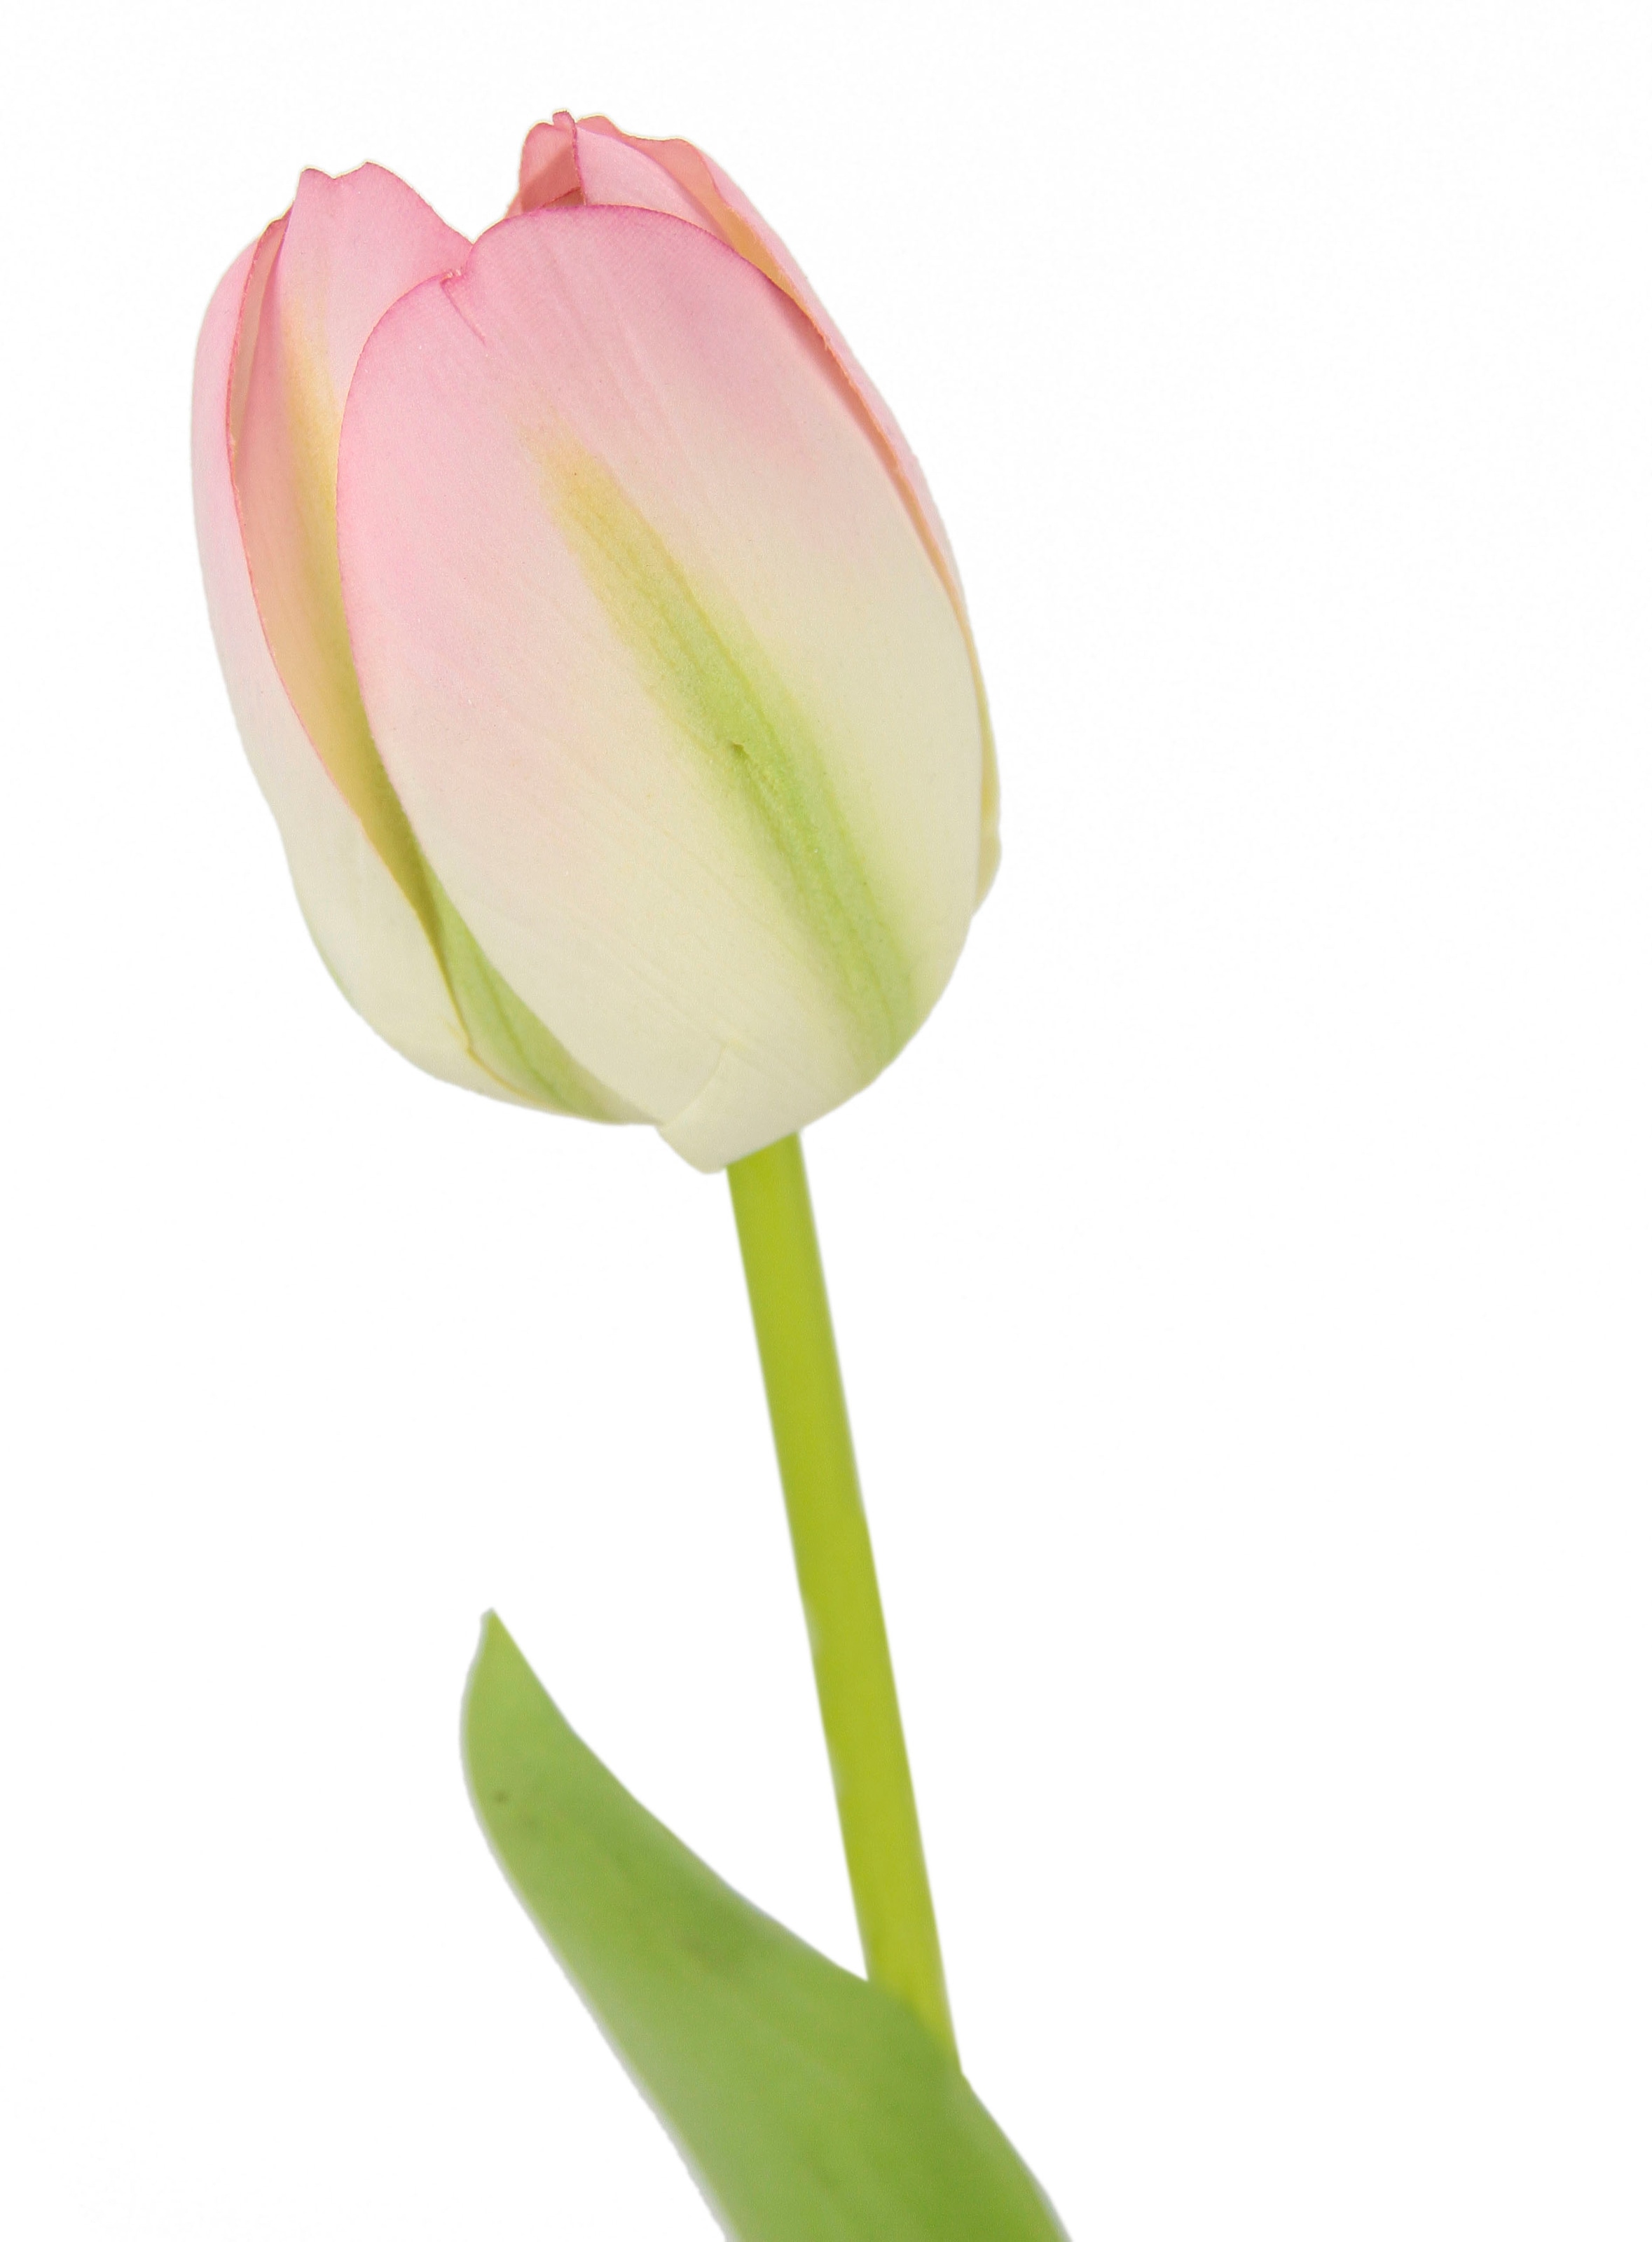 Kunstblume Tulpenknospen, Set Touch künstliche Kunstblumen, 5er »Real jetzt kaufen Tulpen«, I.GE.A. Stielblume